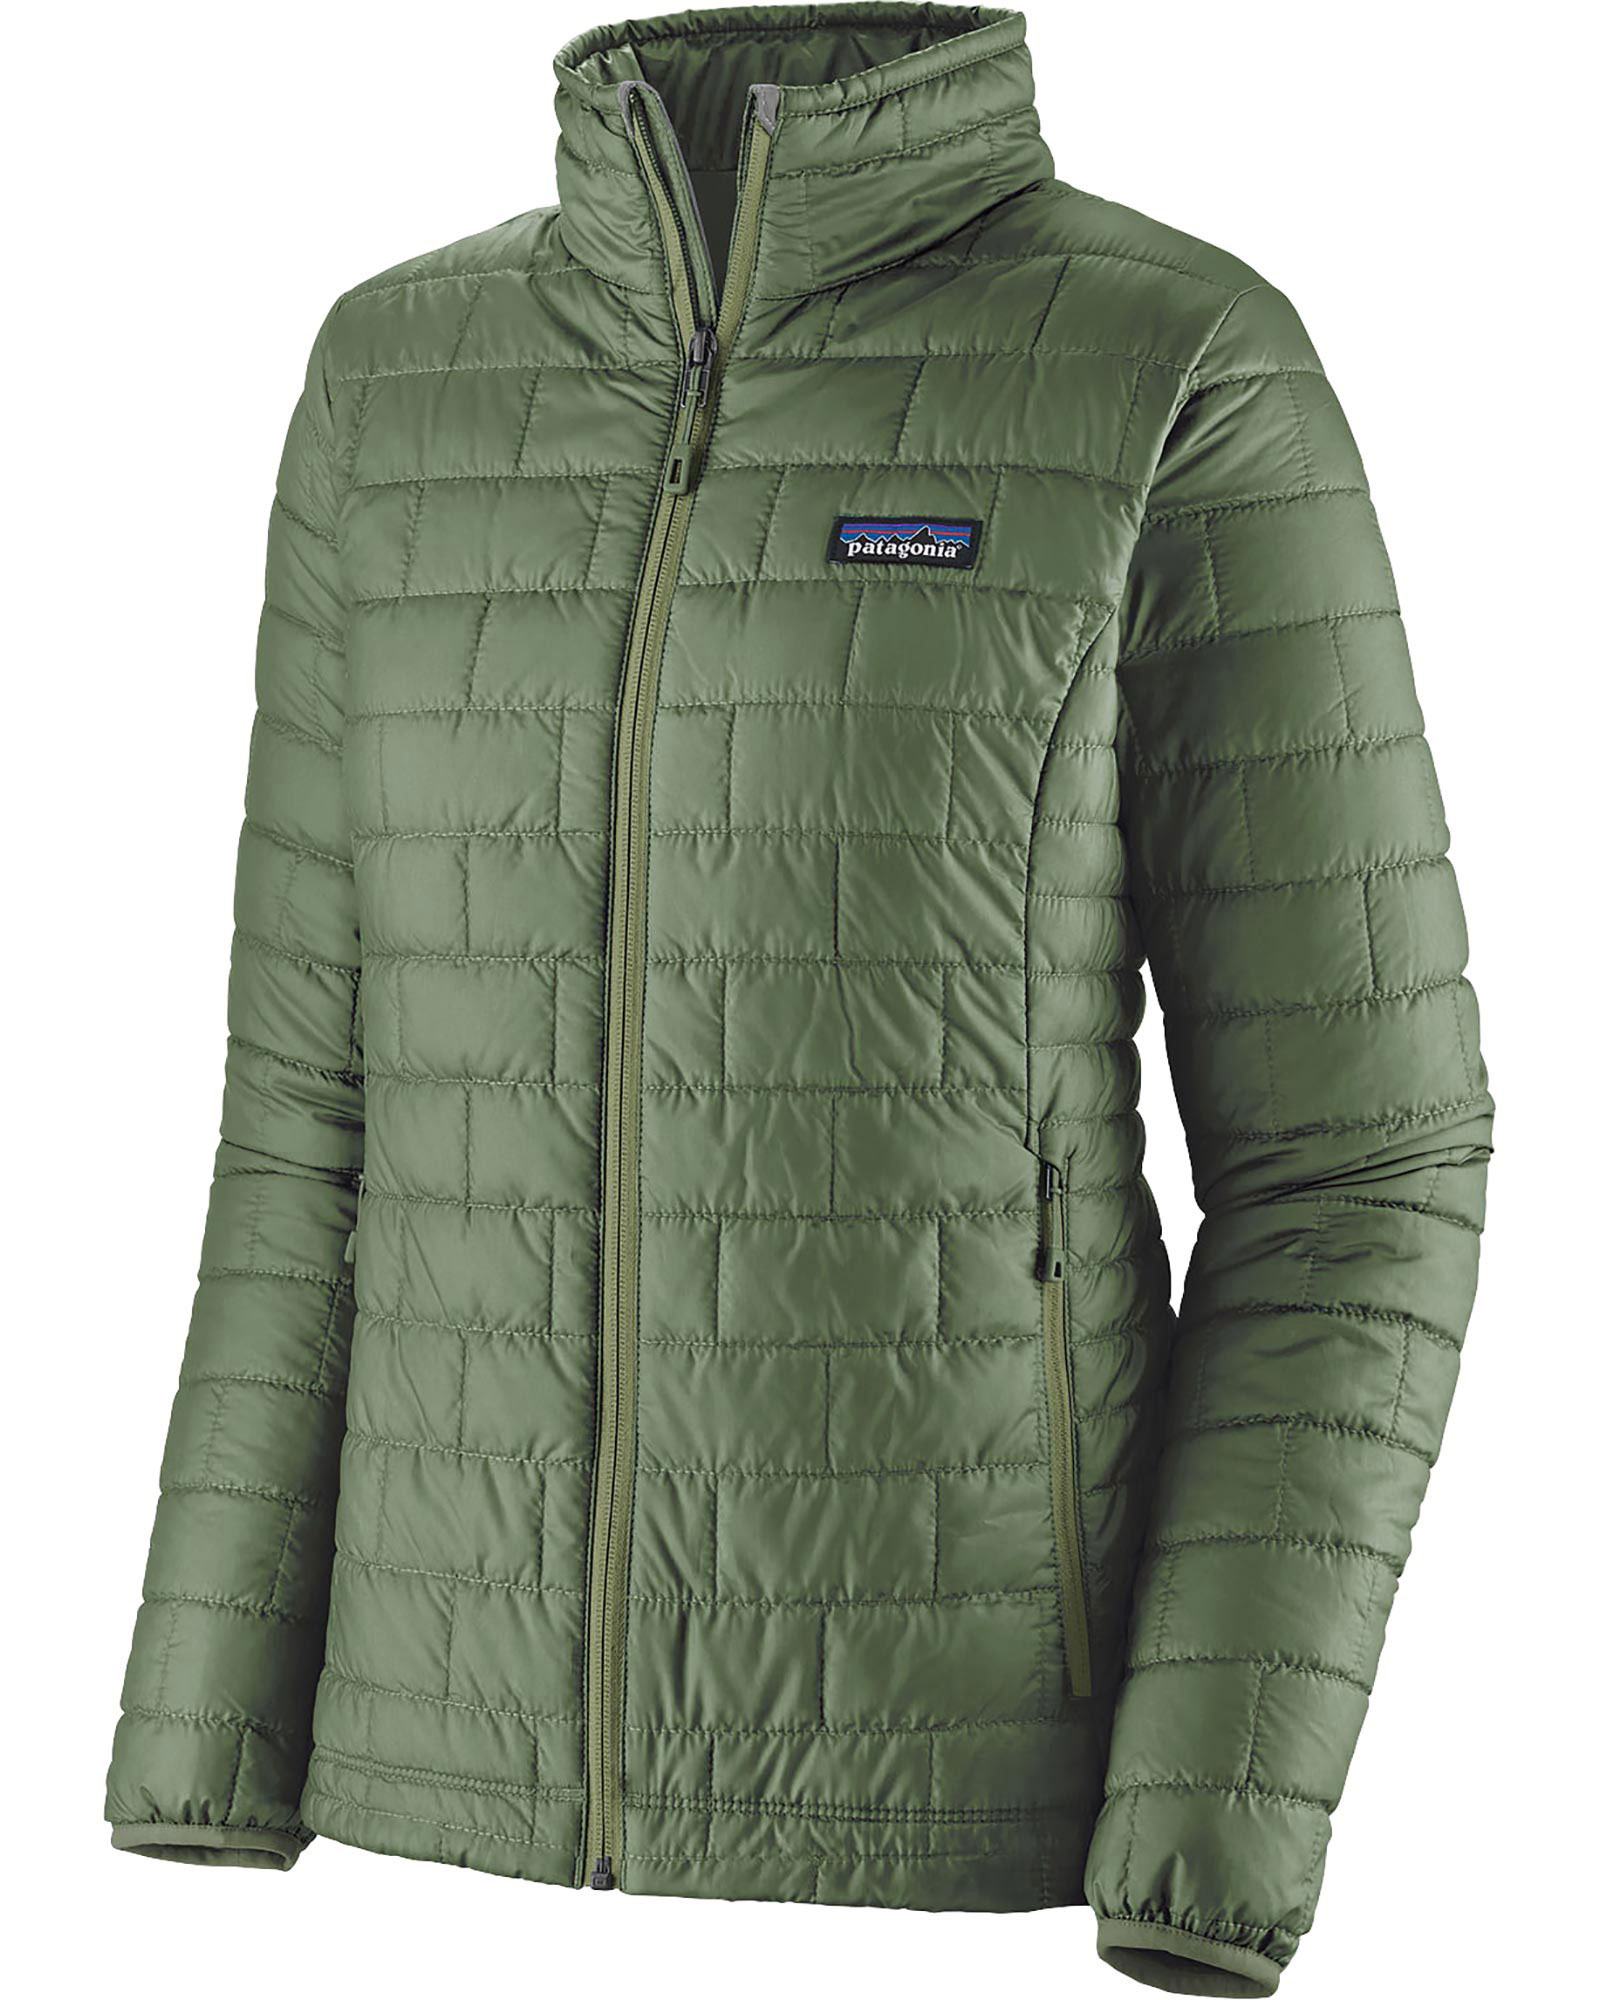 Patagonia Nano Puff Women’s Insulated Jacket - Sedge Green S